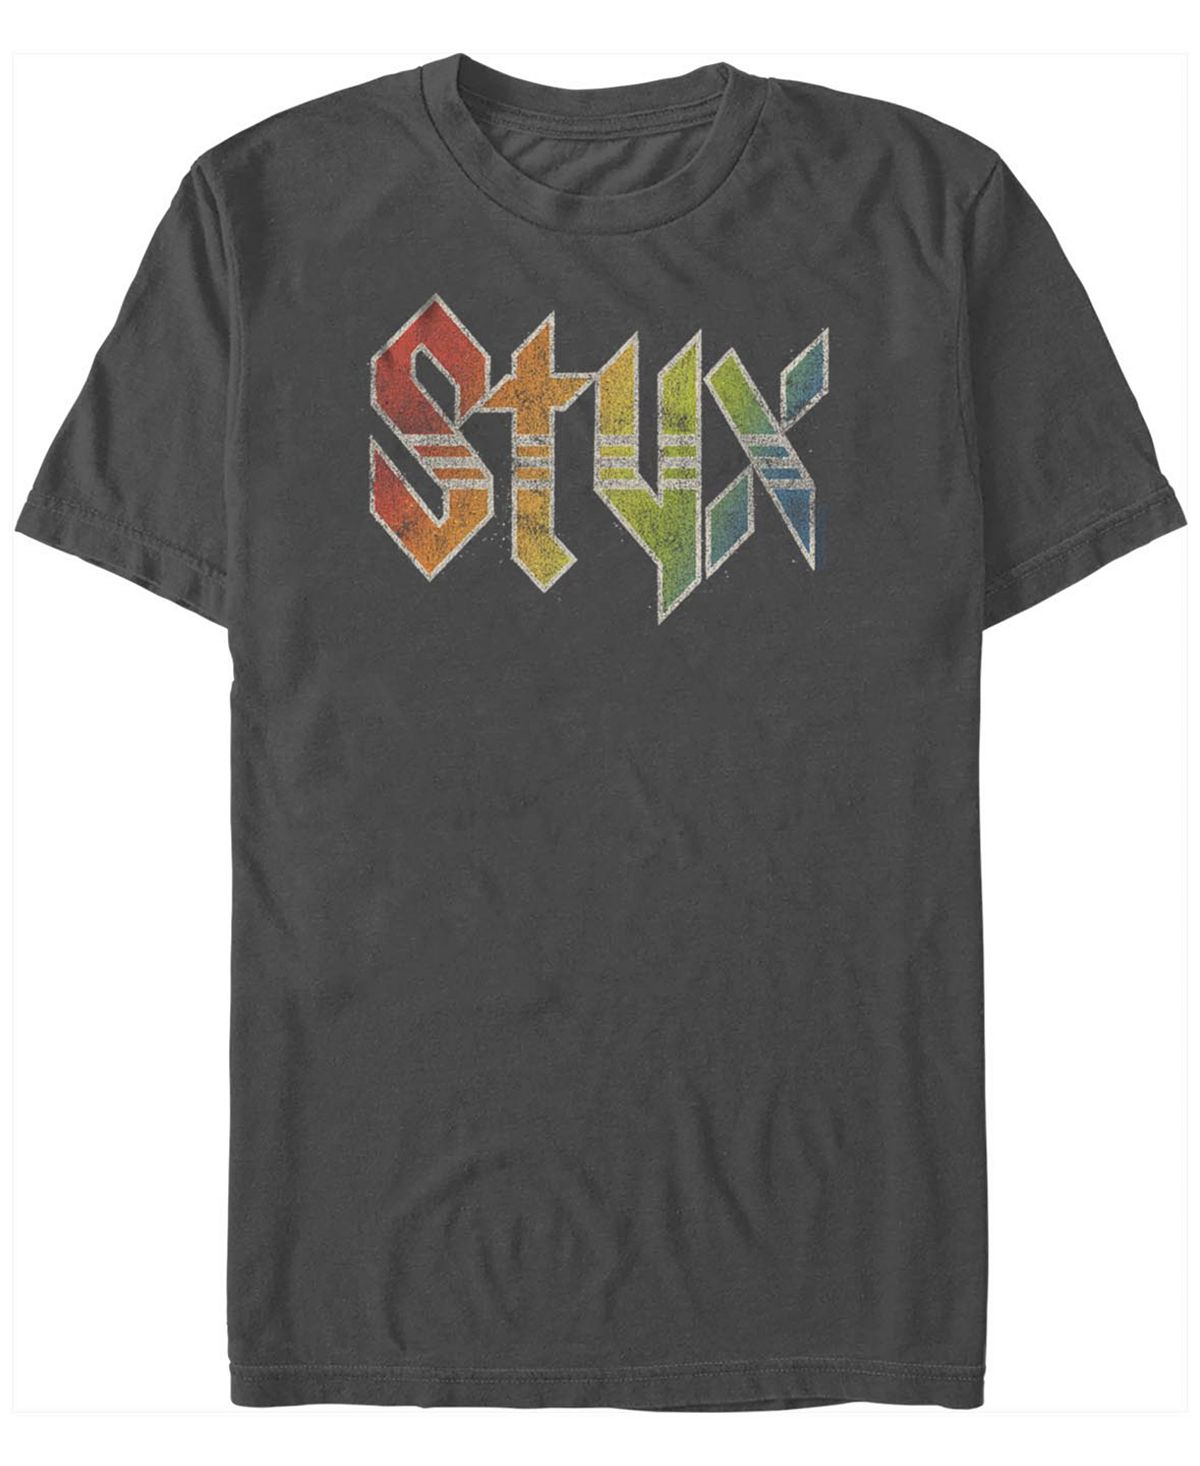 Мужская футболка с коротким рукавом styx с винтажным логотипом Fifth Sun, мульти